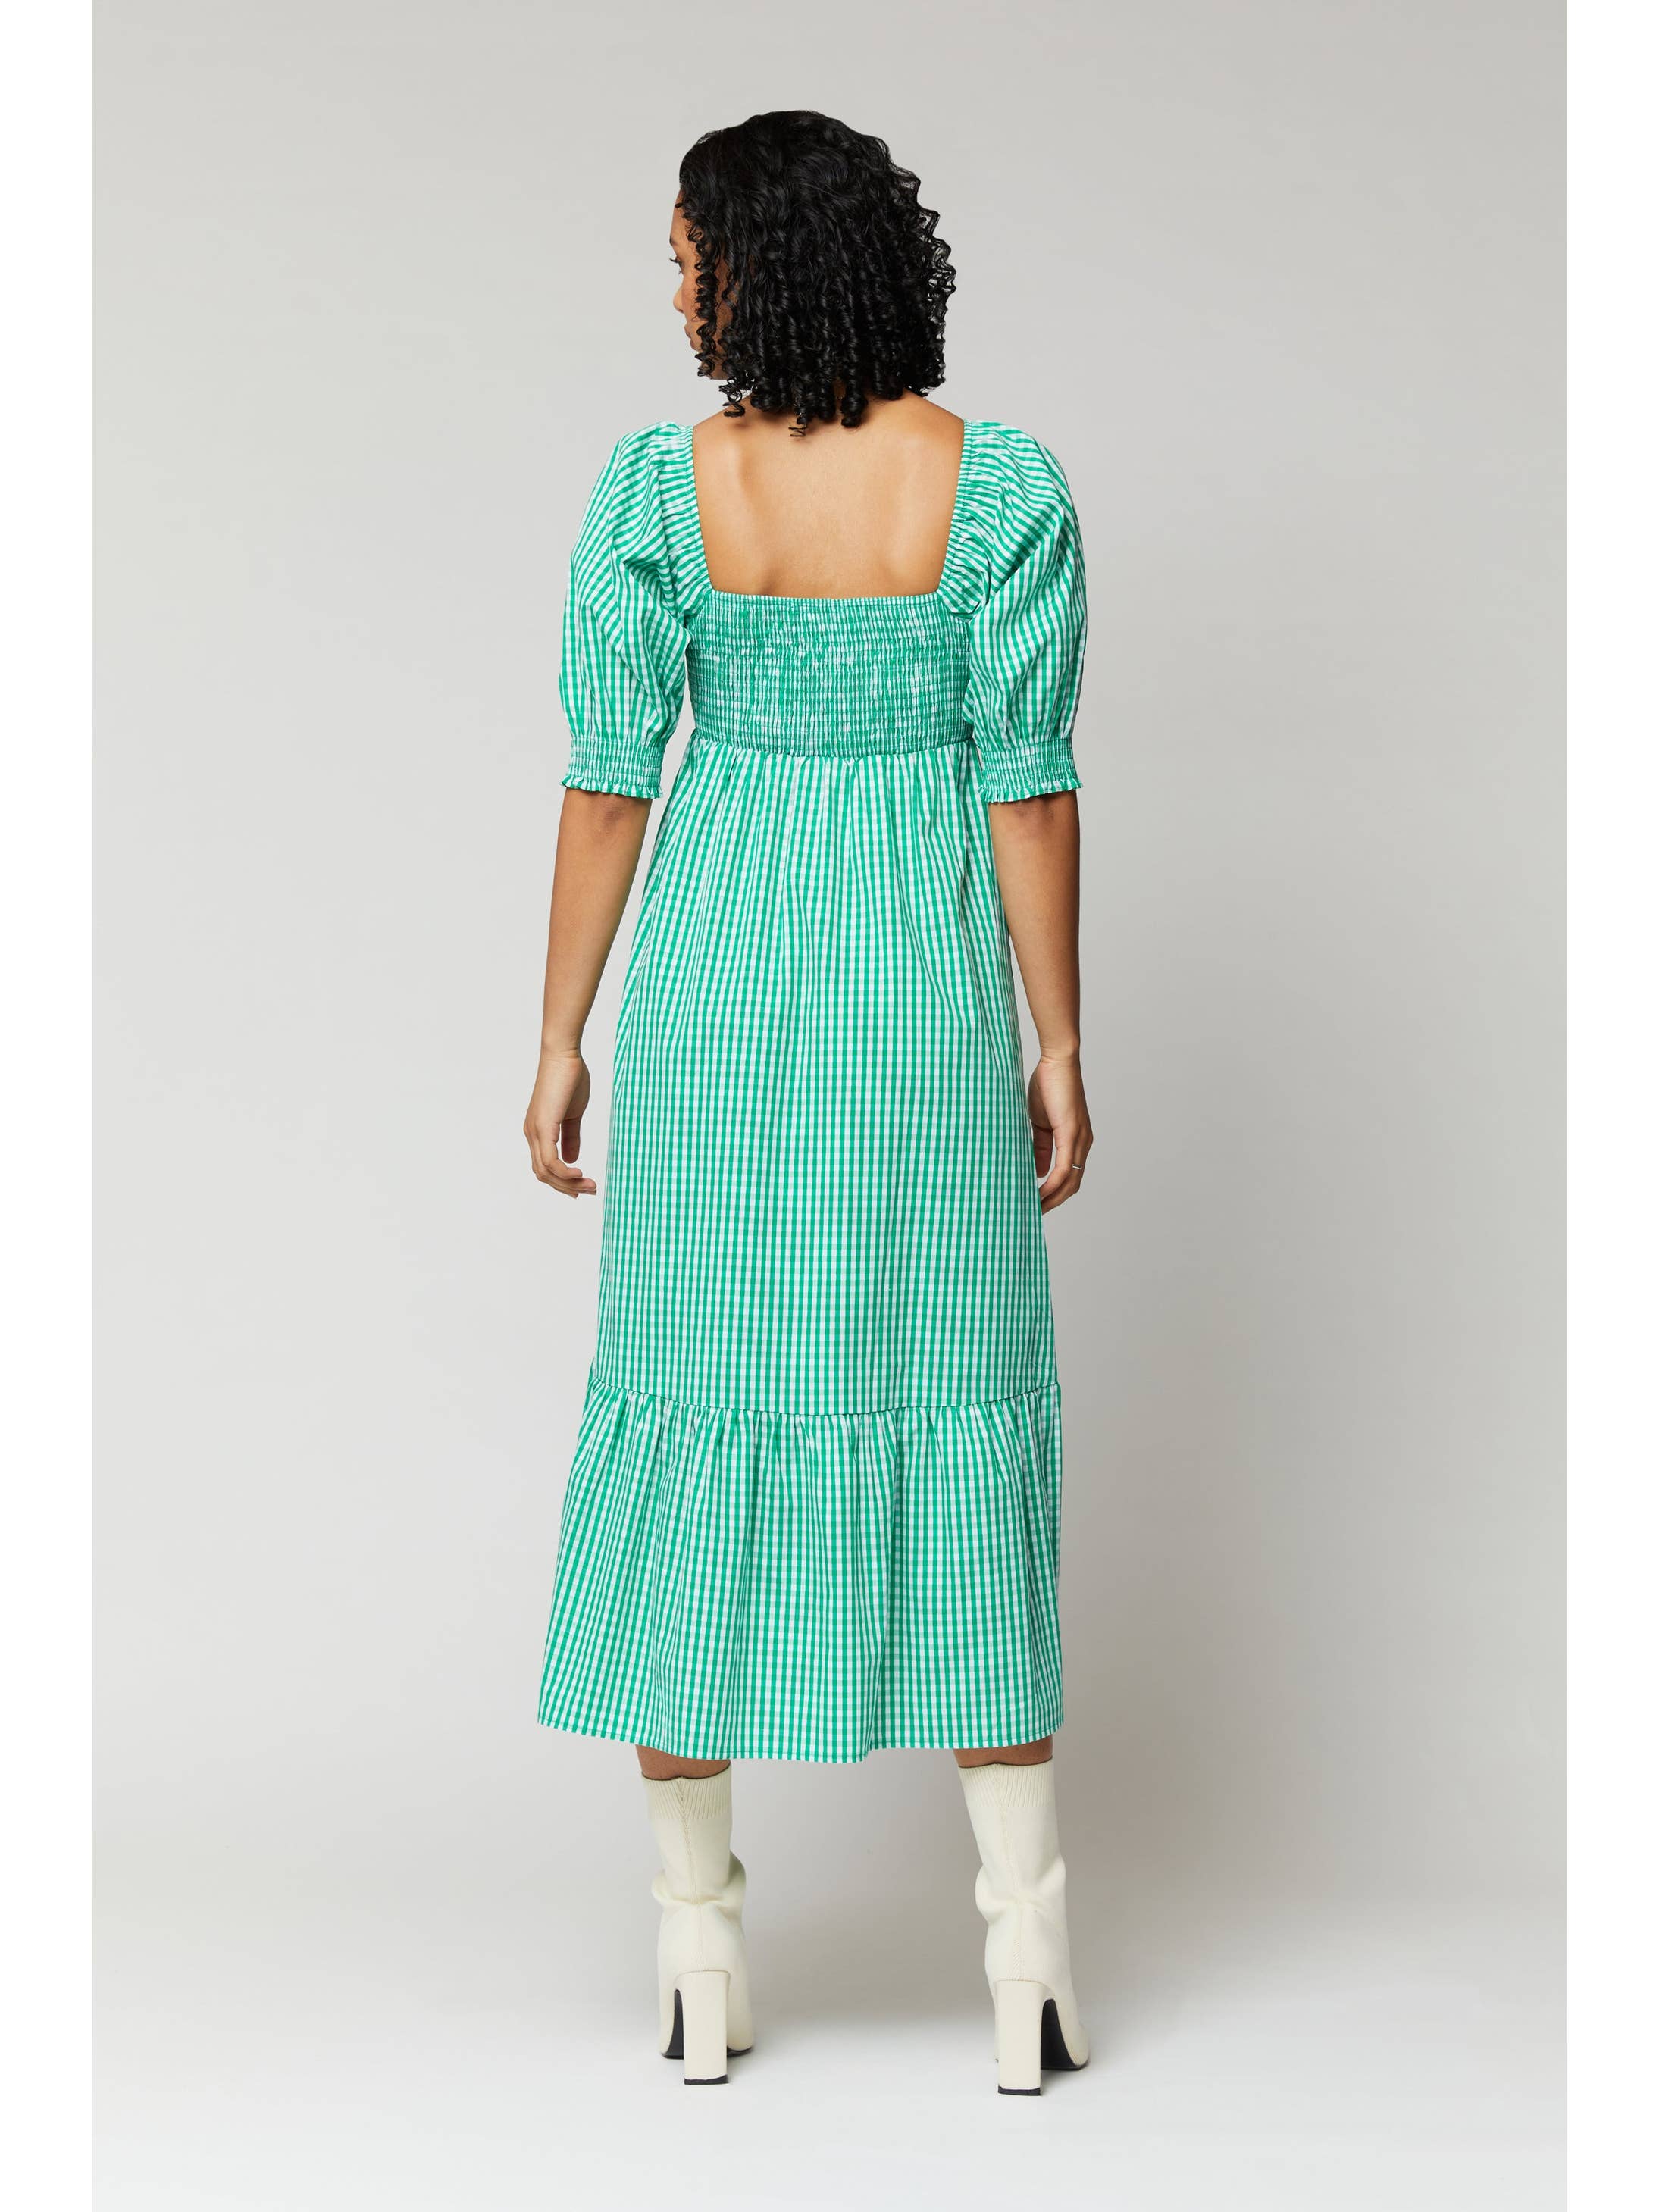 100% Cotton Gingham Dress - Green